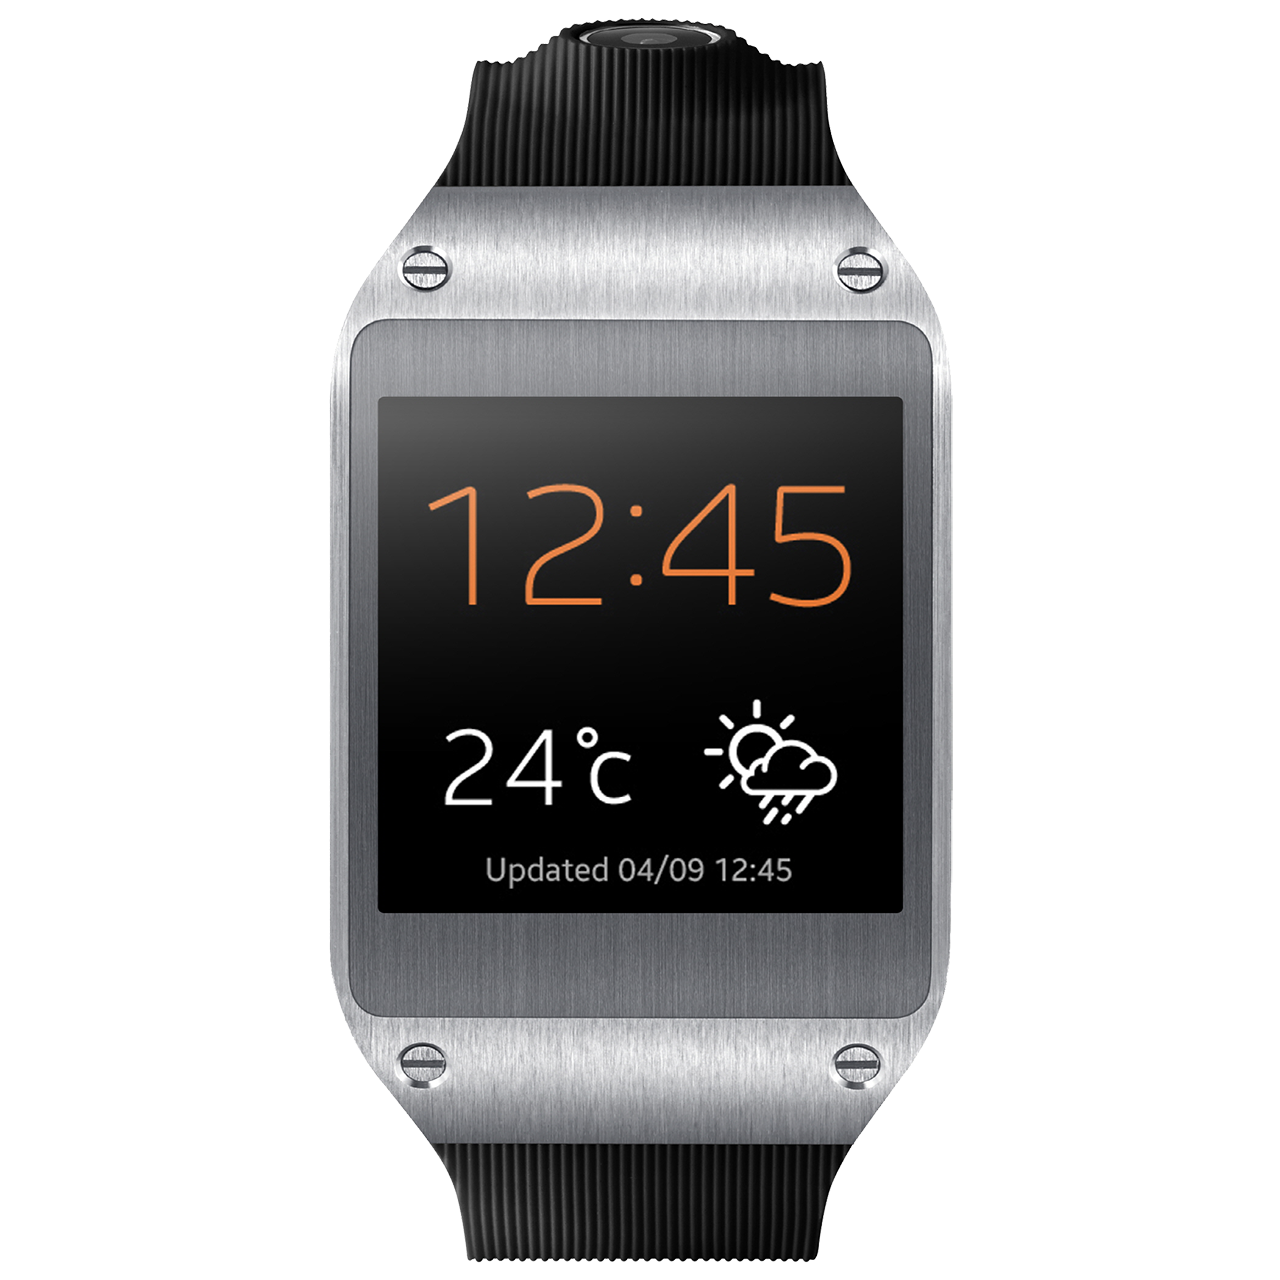 Smarte Samsung-Uhr